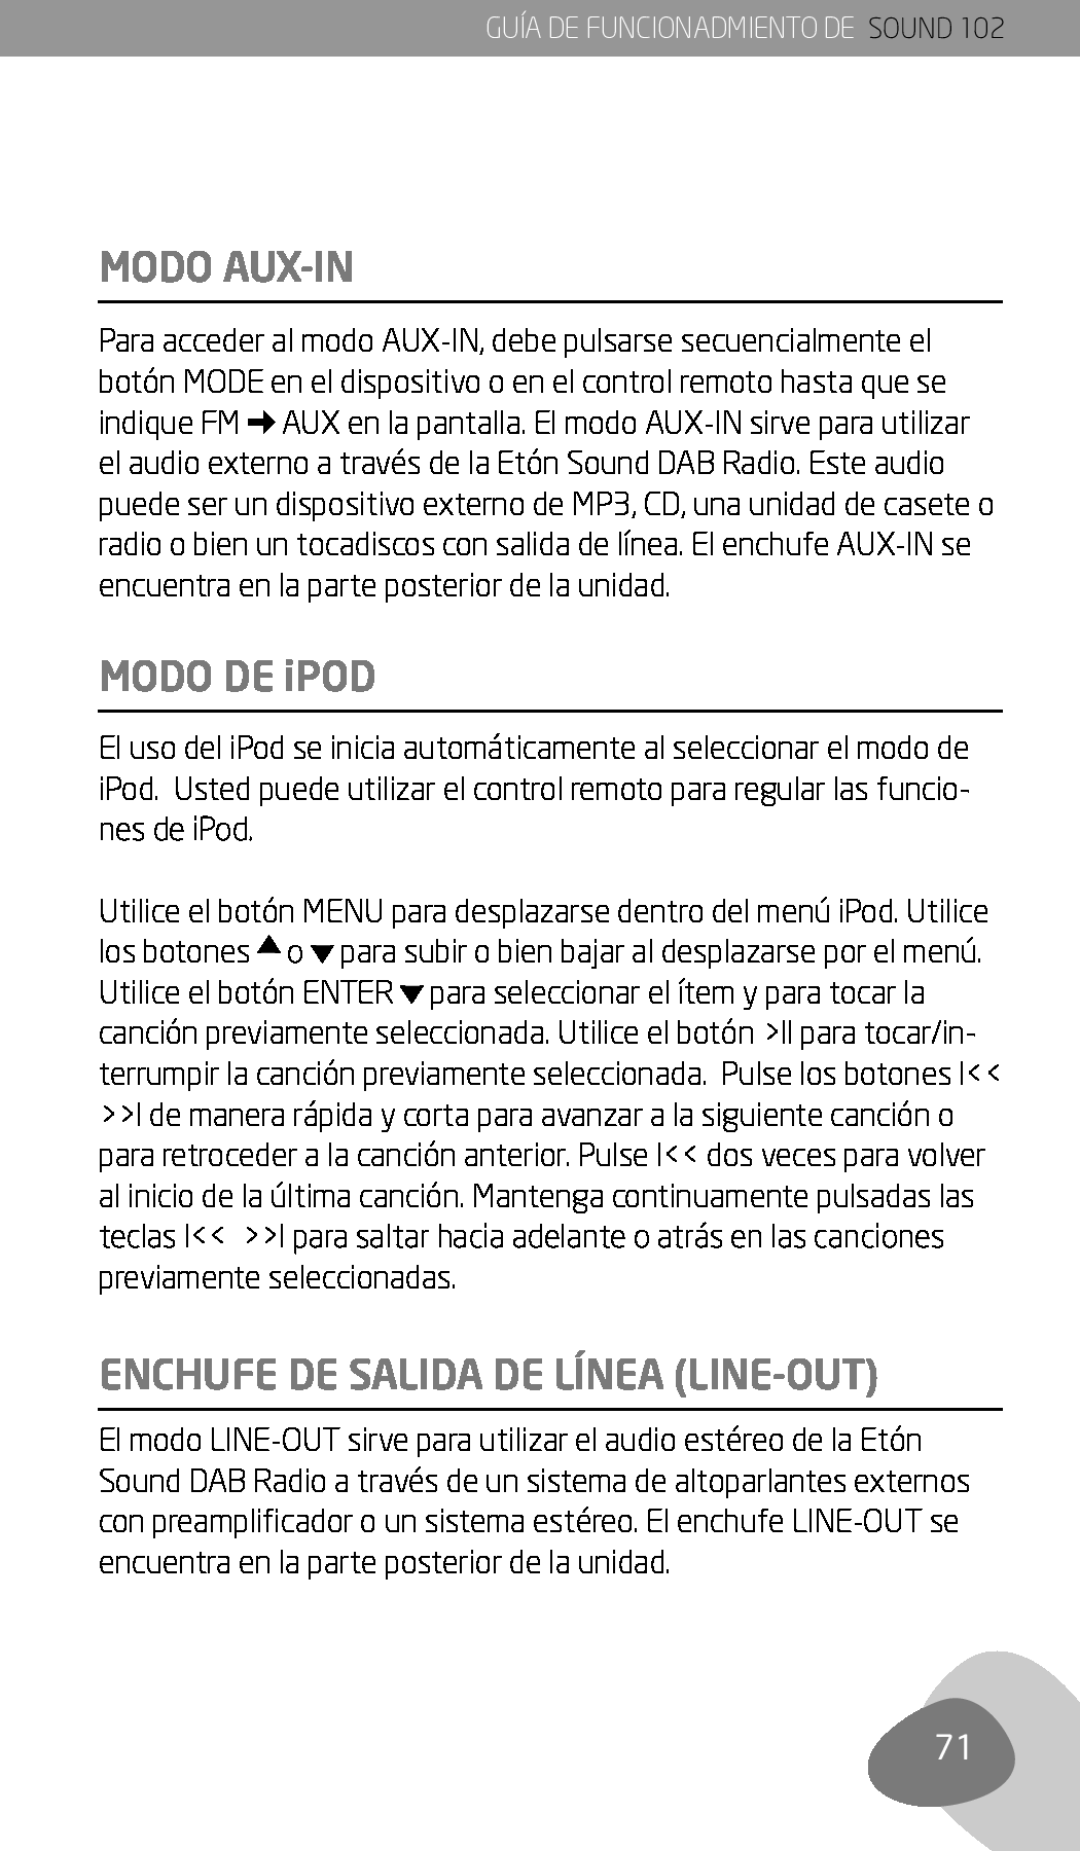 Eton 102 owner manual Modo AUX-IN, Modo de iPod, Enchufe de salida de línea LINE-OUT 